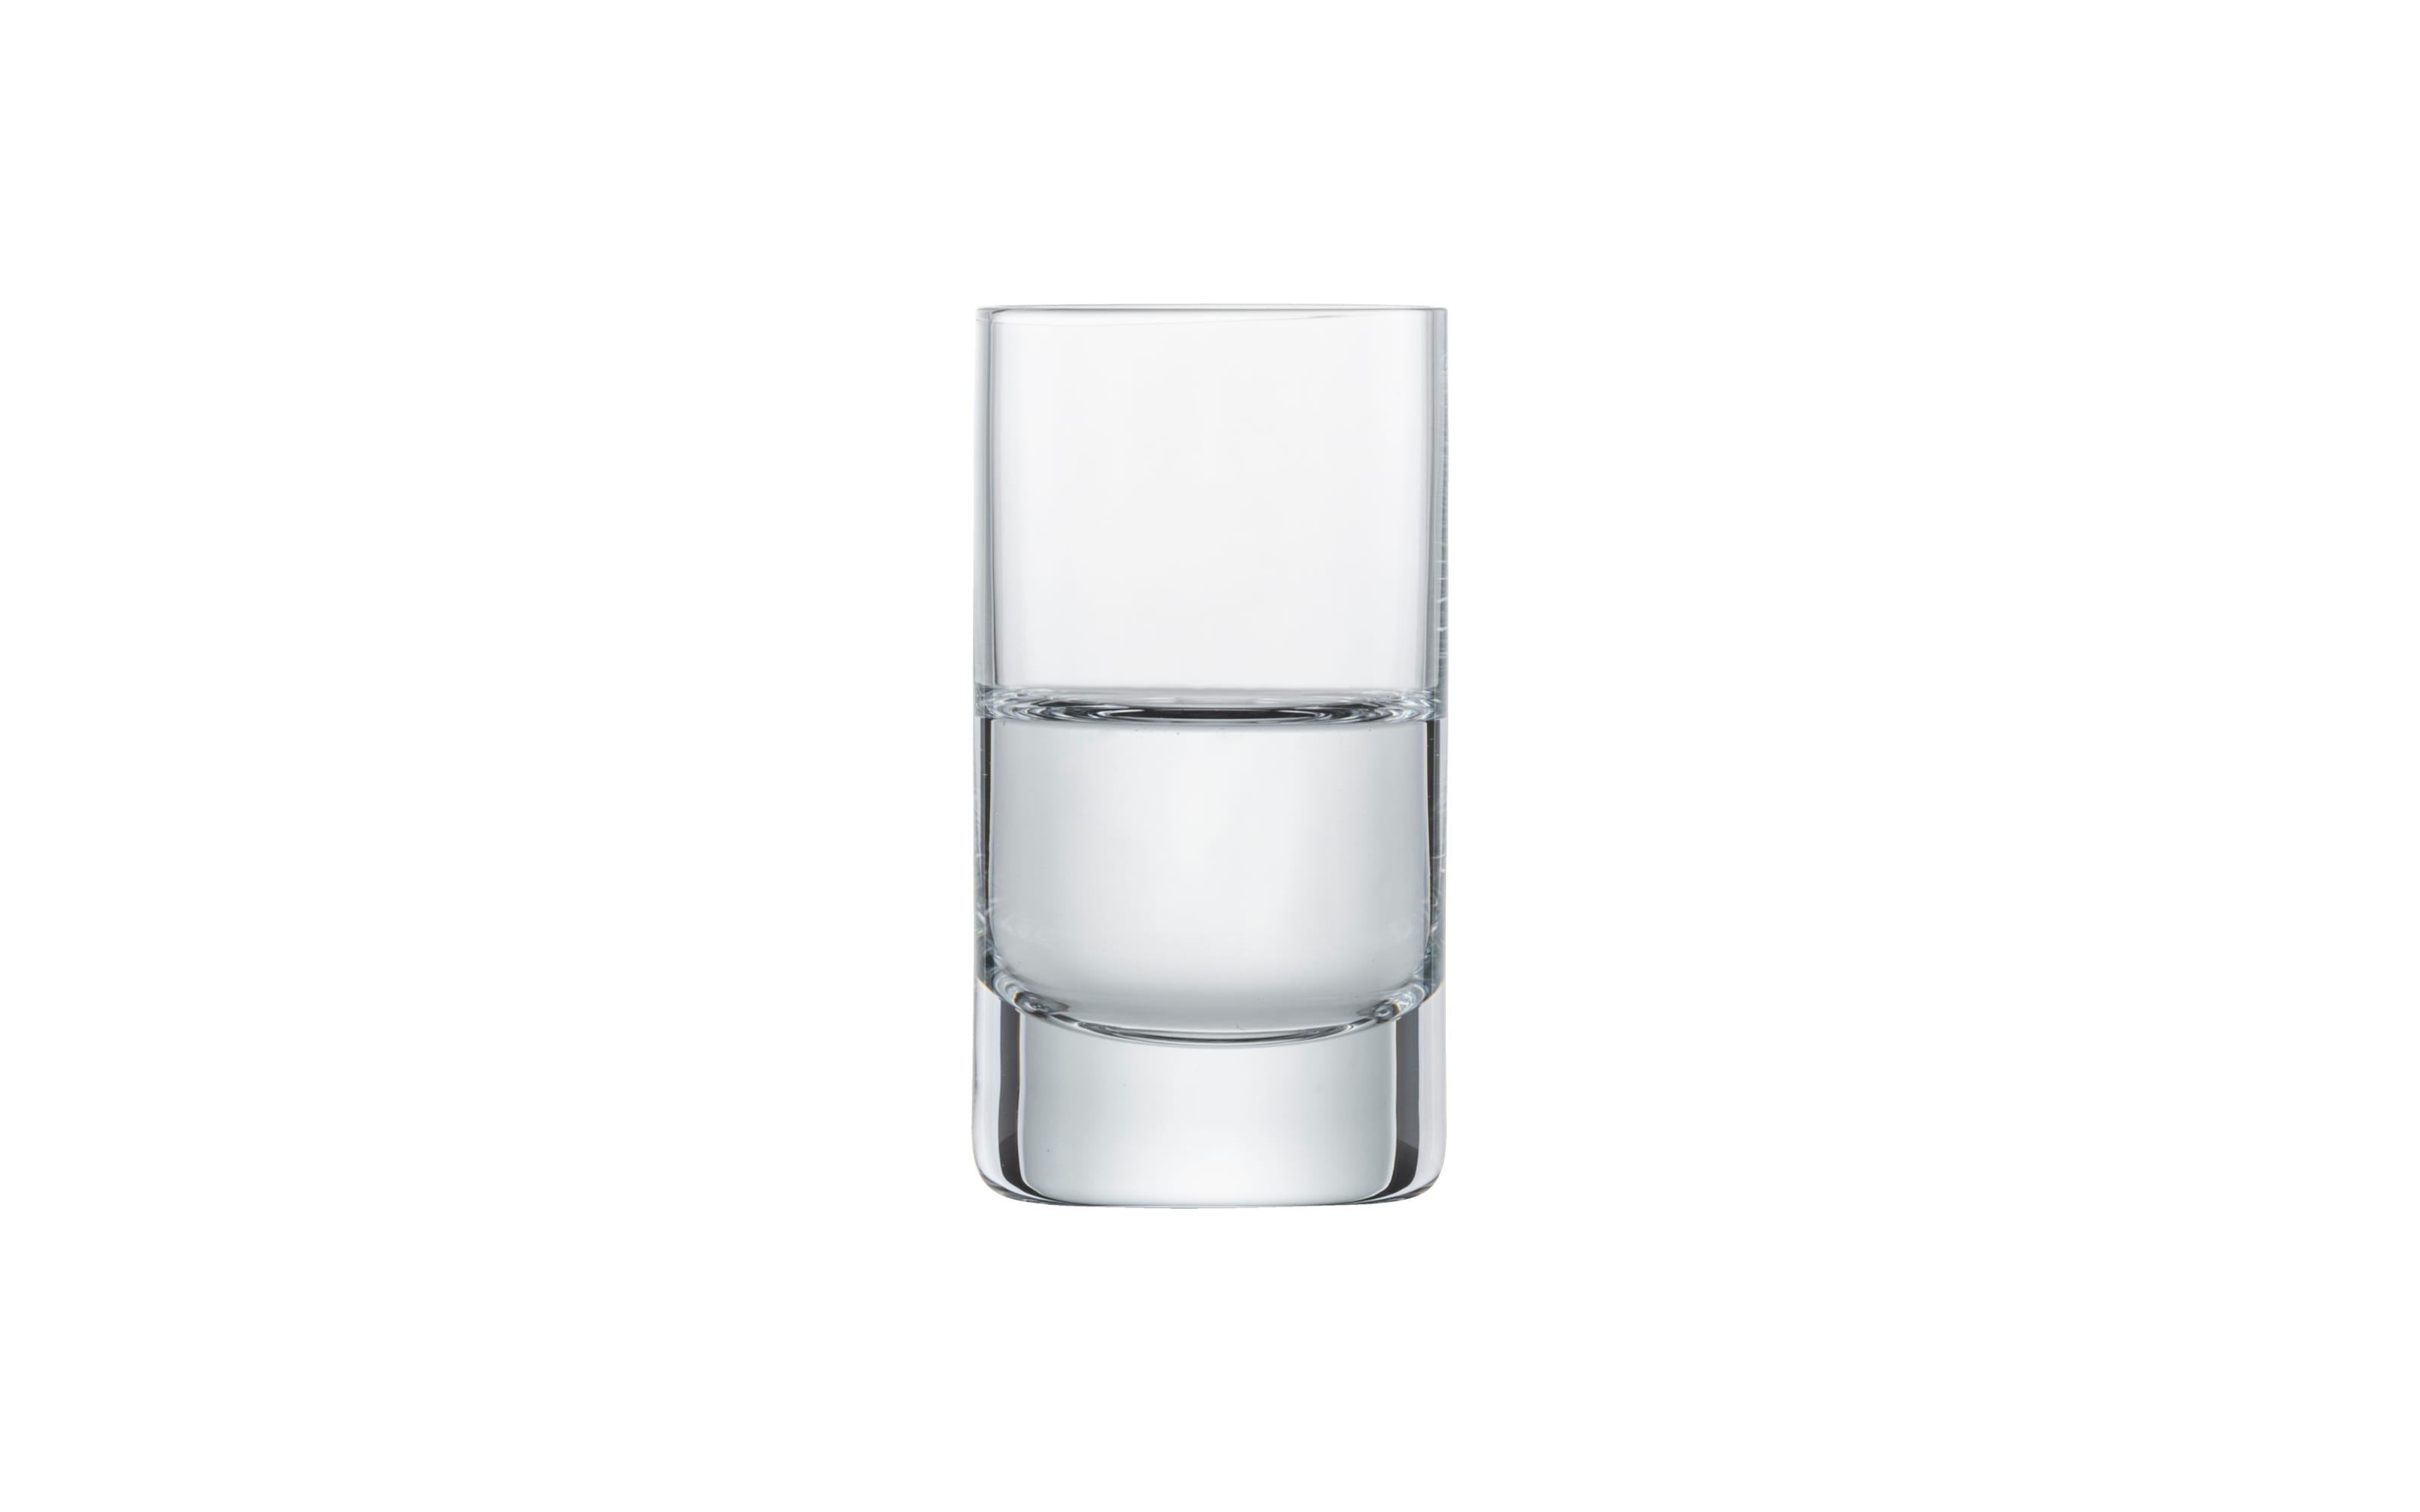 Schnapsglas Tavro, 40 ml, 7,2 cm